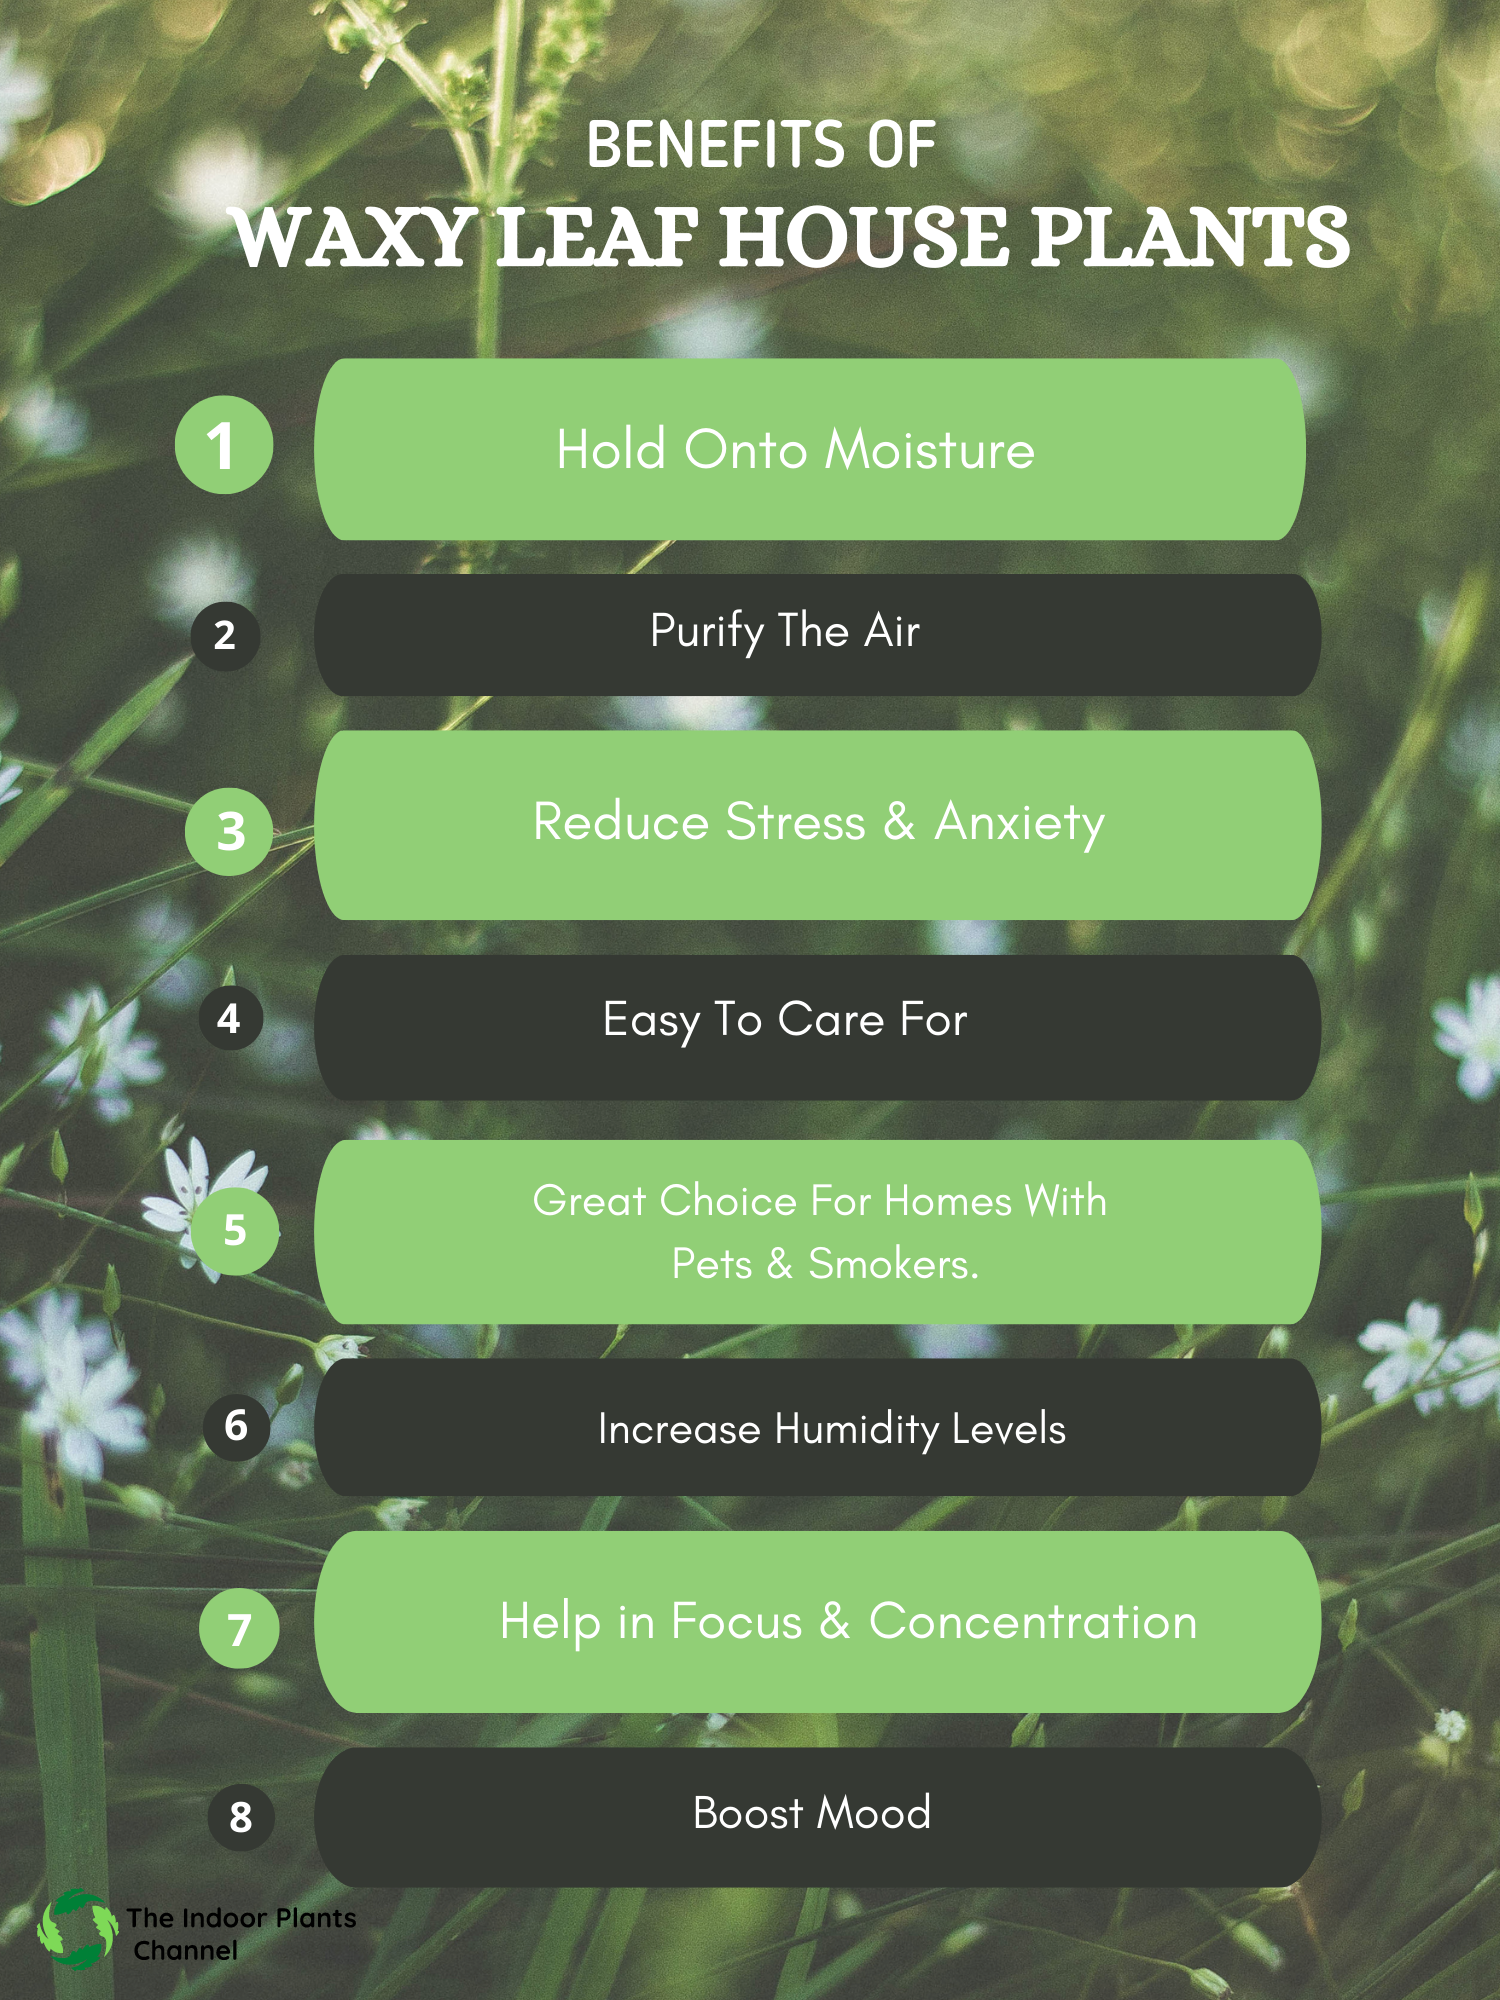 Benefits Of Having Waxy Leaf House Plants